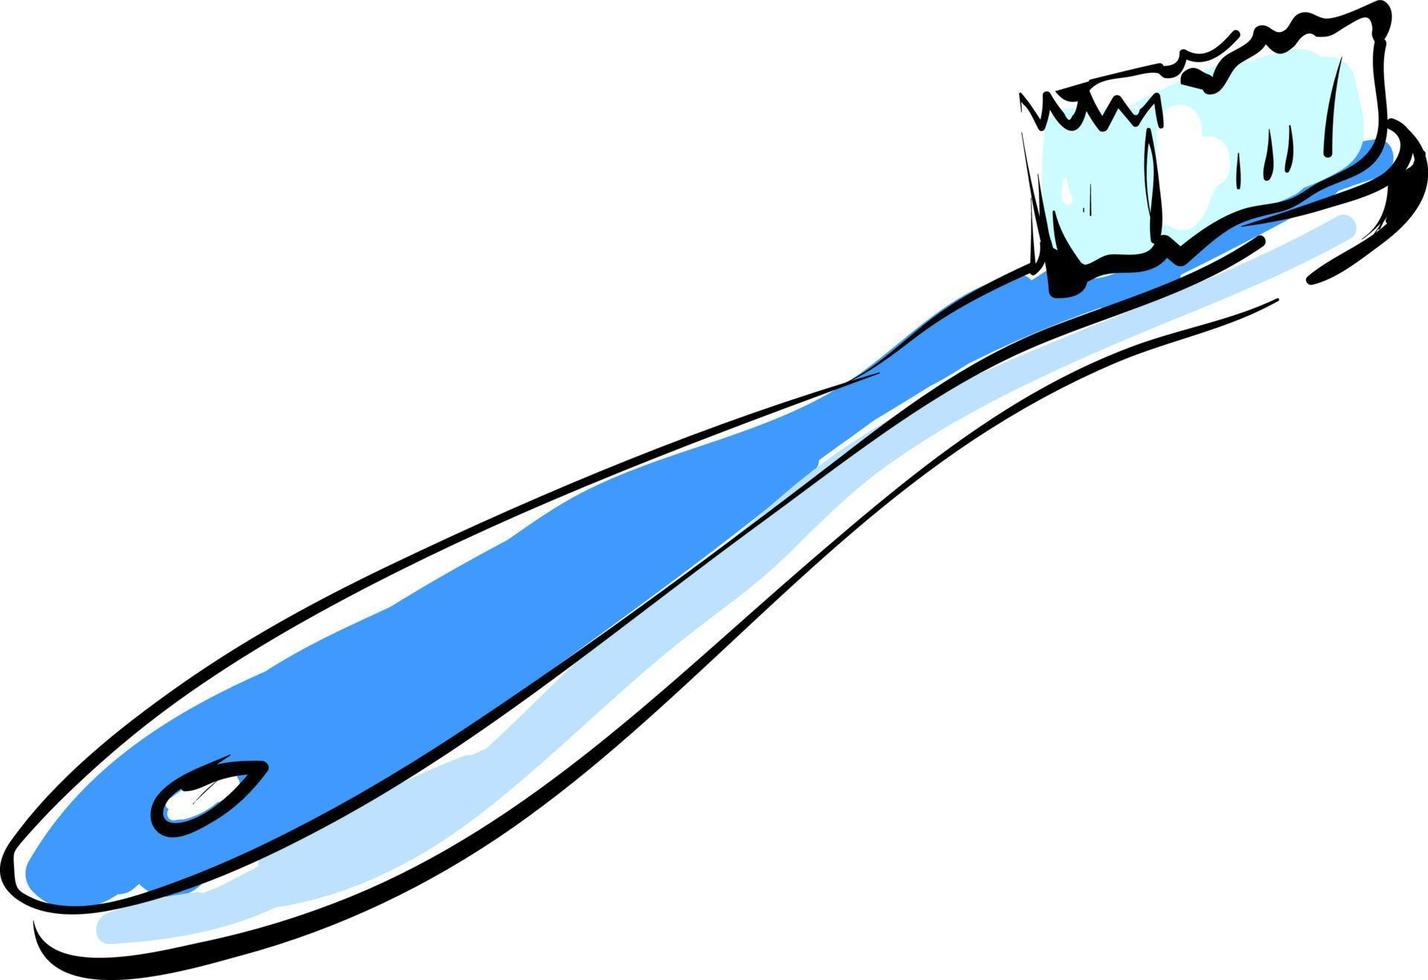 Blue toothbrush, illustration, vector on white background.